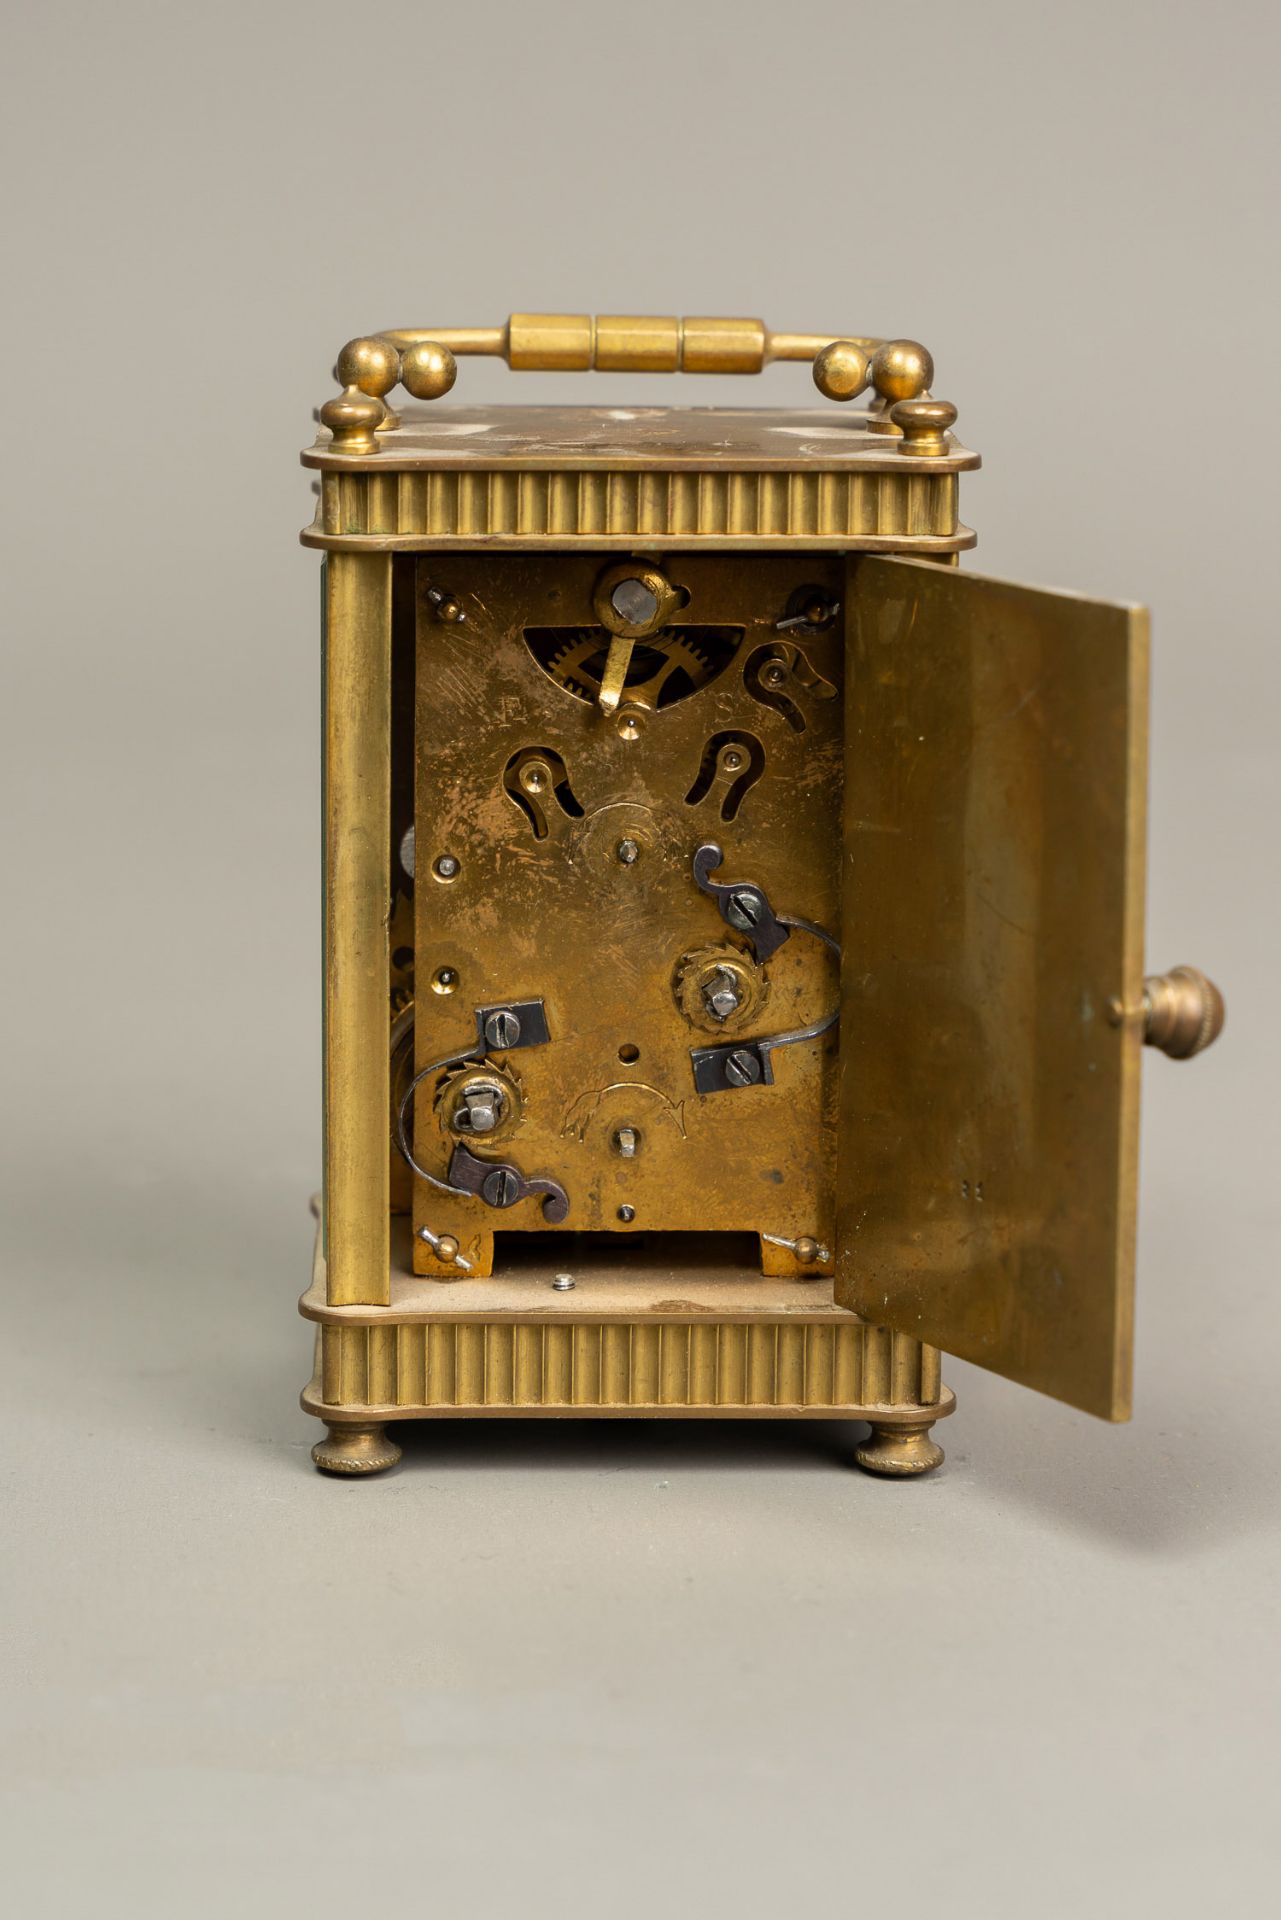 French Alarm Clock - Image 3 of 3